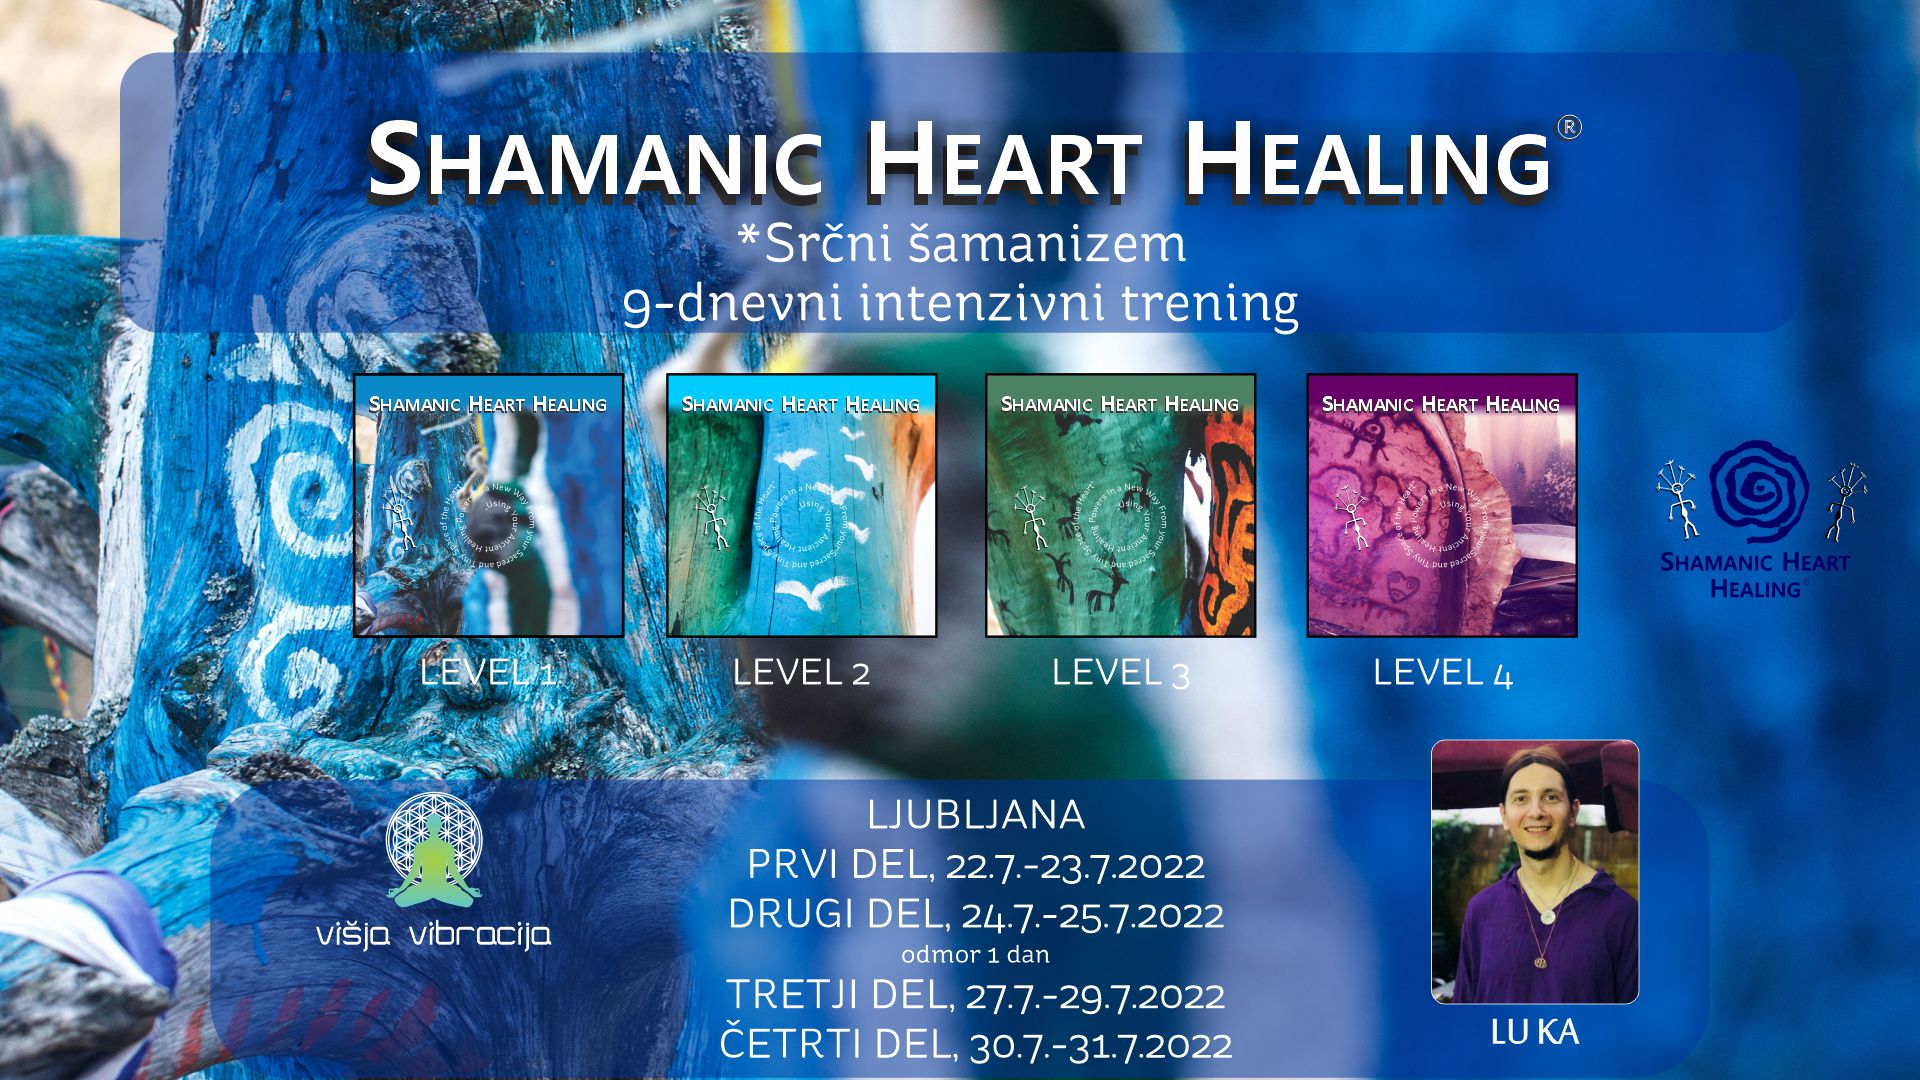 SRČNI ŠAMANIZEM - SHAMANIC HEART HEALING (vodi LU KA) - TRETJI in ČETRTI DEL 7